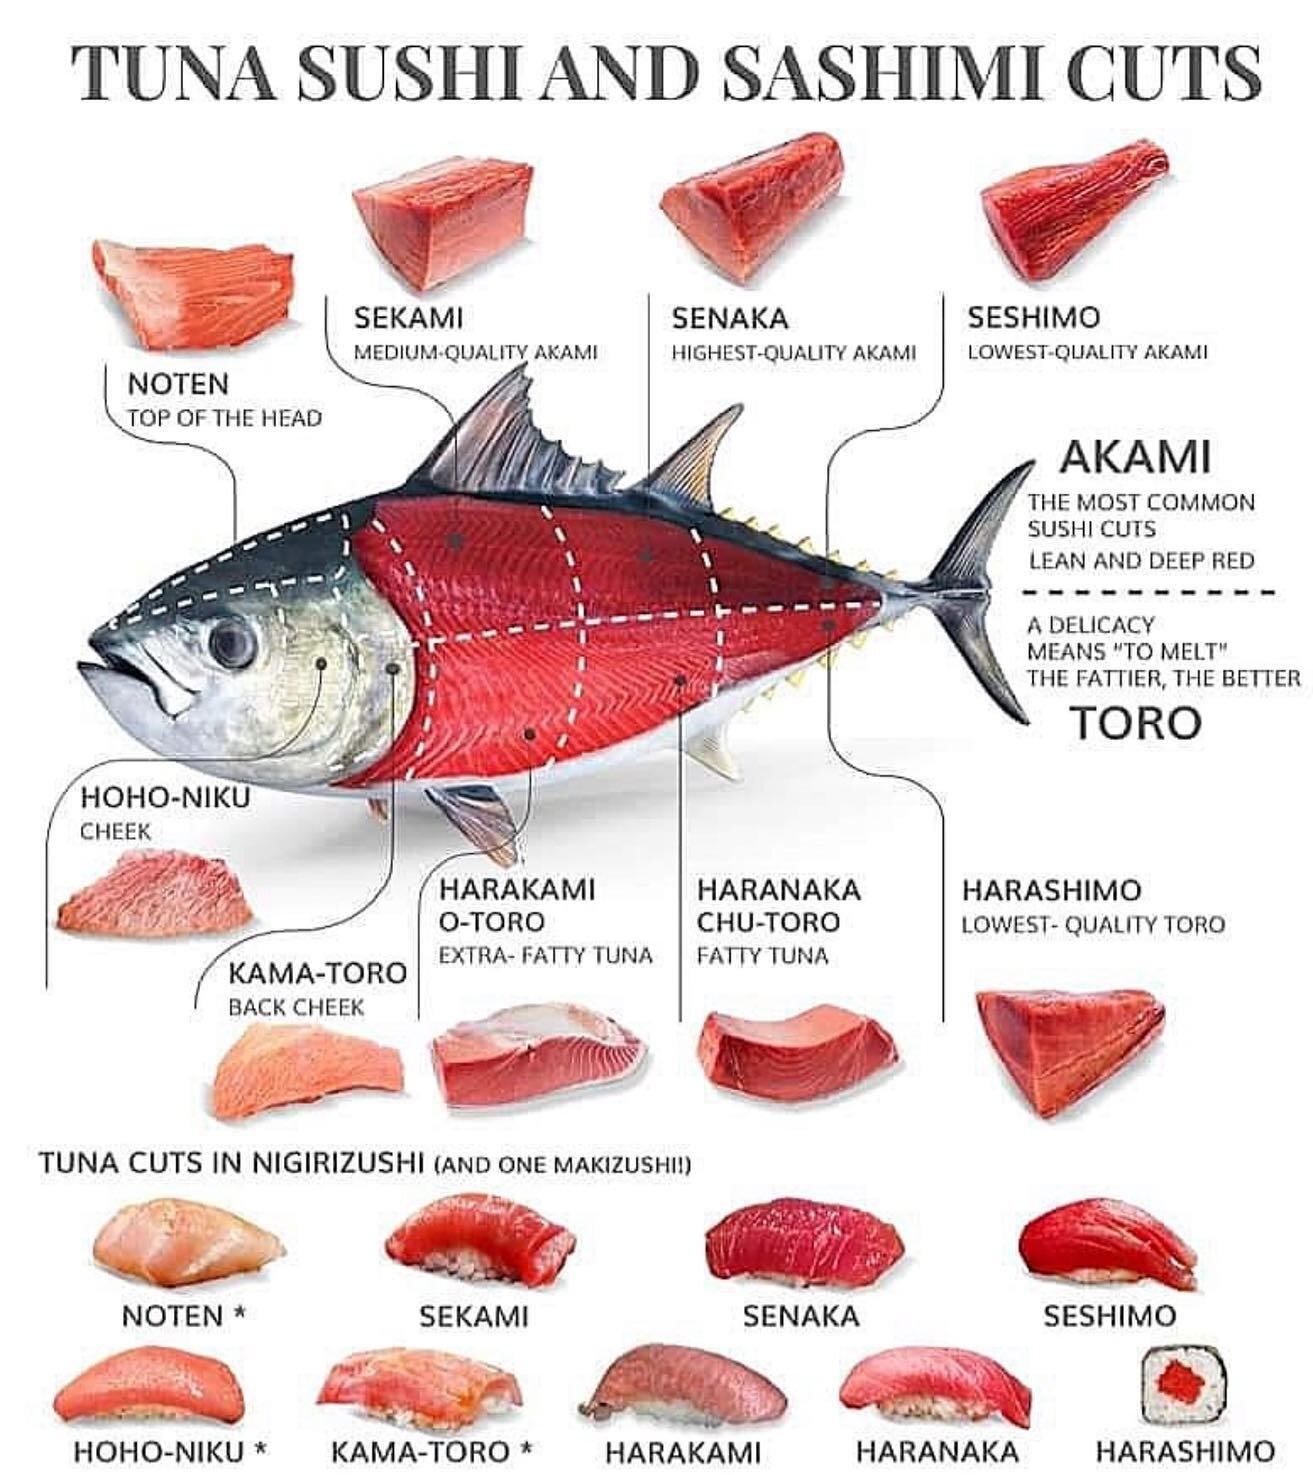 &bull;
&bull;
&bull;
&bull;
&bull;
#sushi #sashimi #salmon #tuna #sushiporn #sushitime #sushilovers #japanesefood #riviera #buick #yellowfin #atun #wahoo #marlin #yellowtail #offshore #japa #comidajaponesa #omakase #seafood #spearfishing #fish #sake 